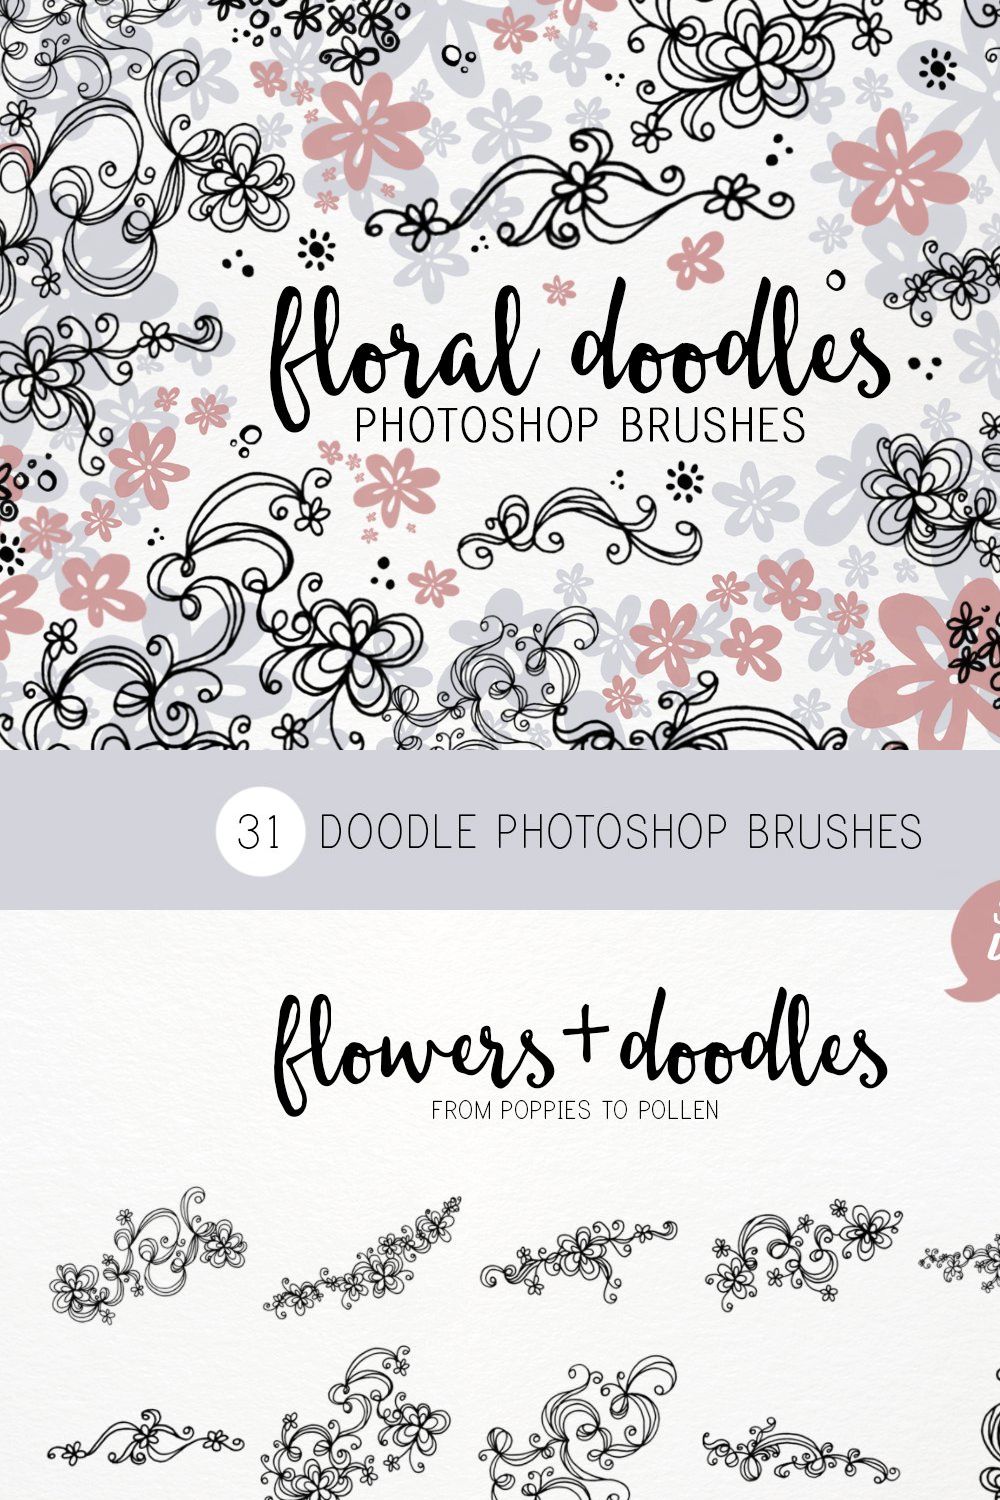 Floral Doodle photoshop brushes pinterest preview image.